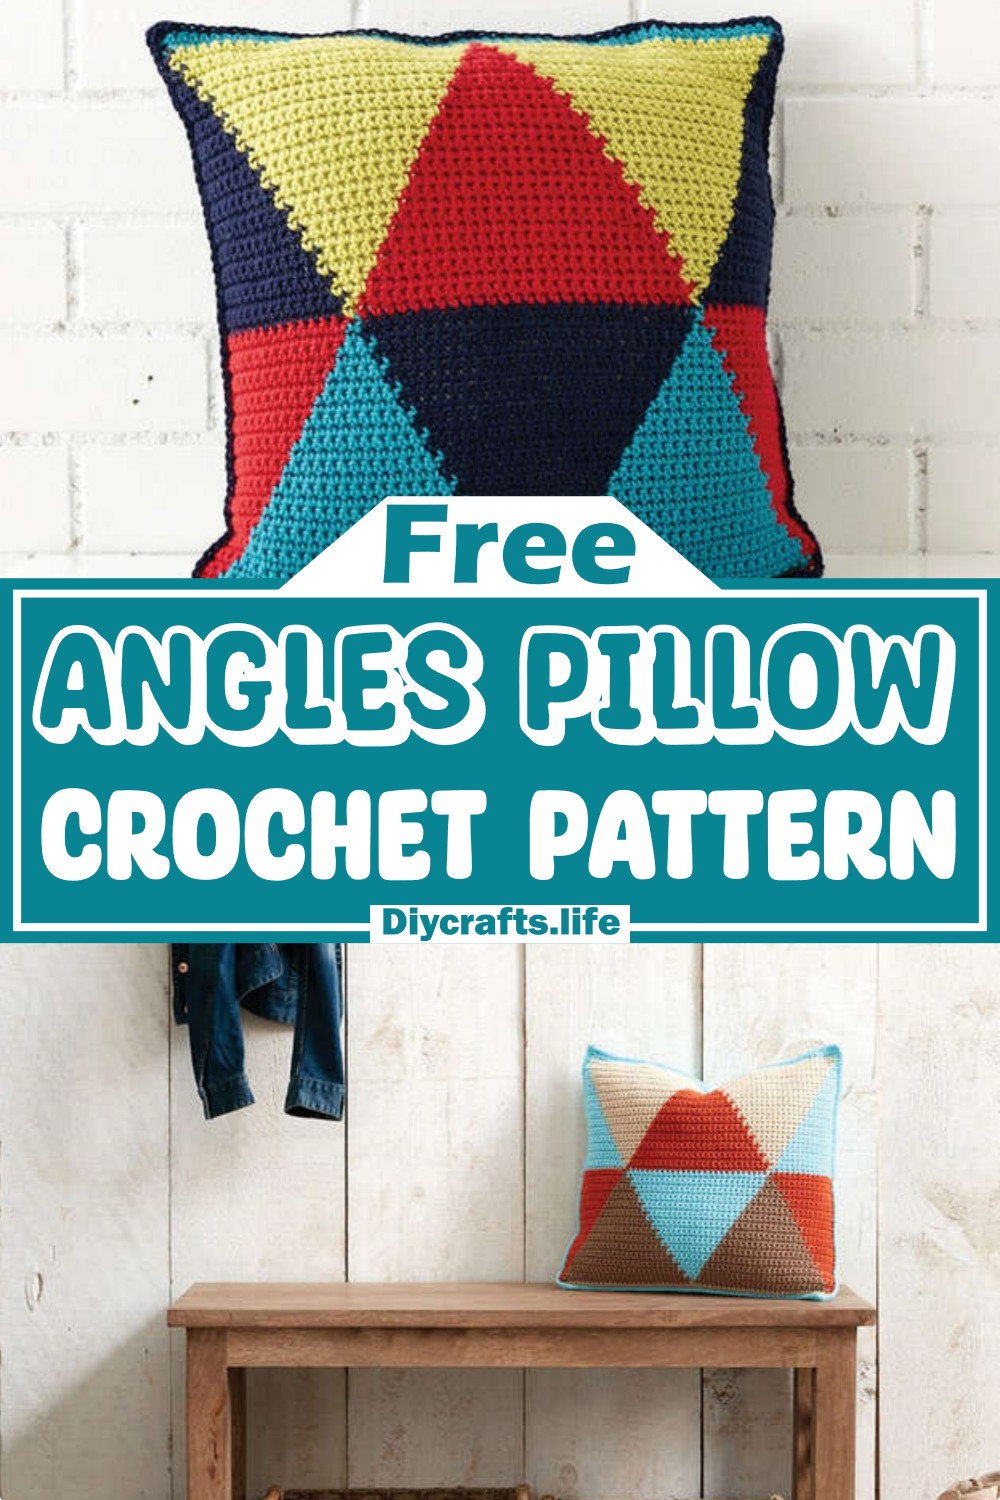 Crochet Angles Pillow